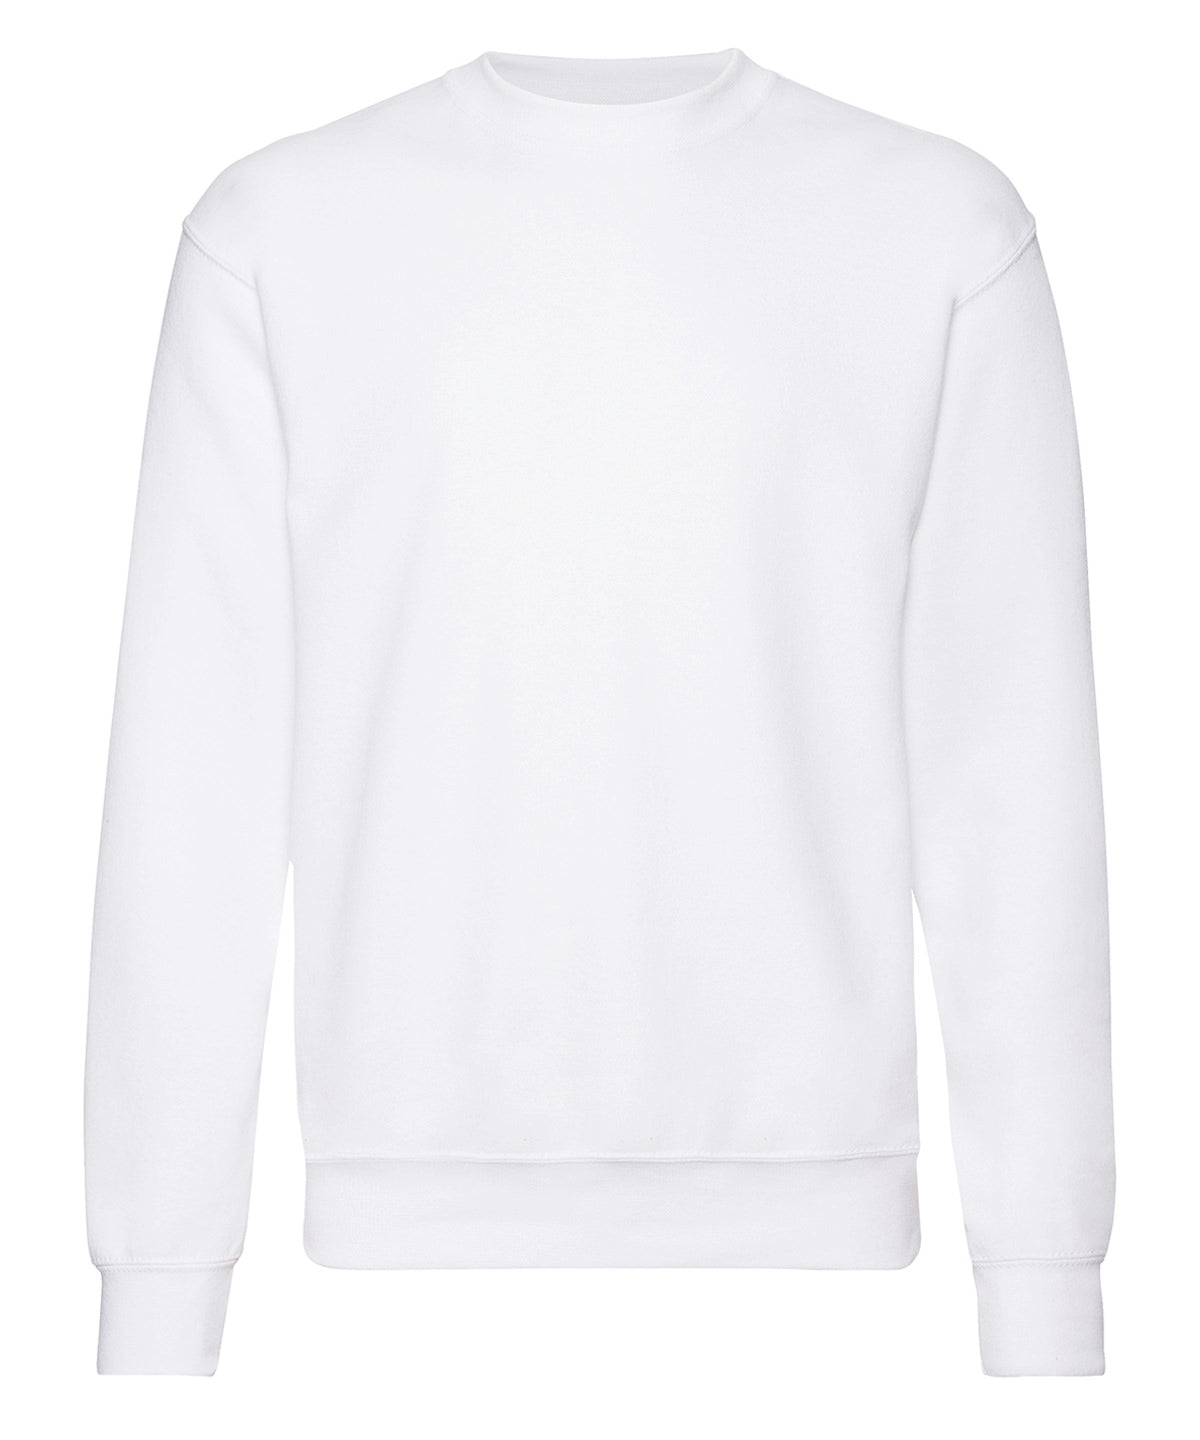 Fruit of the Loom Classic 80/20 set-in sweatshirt White